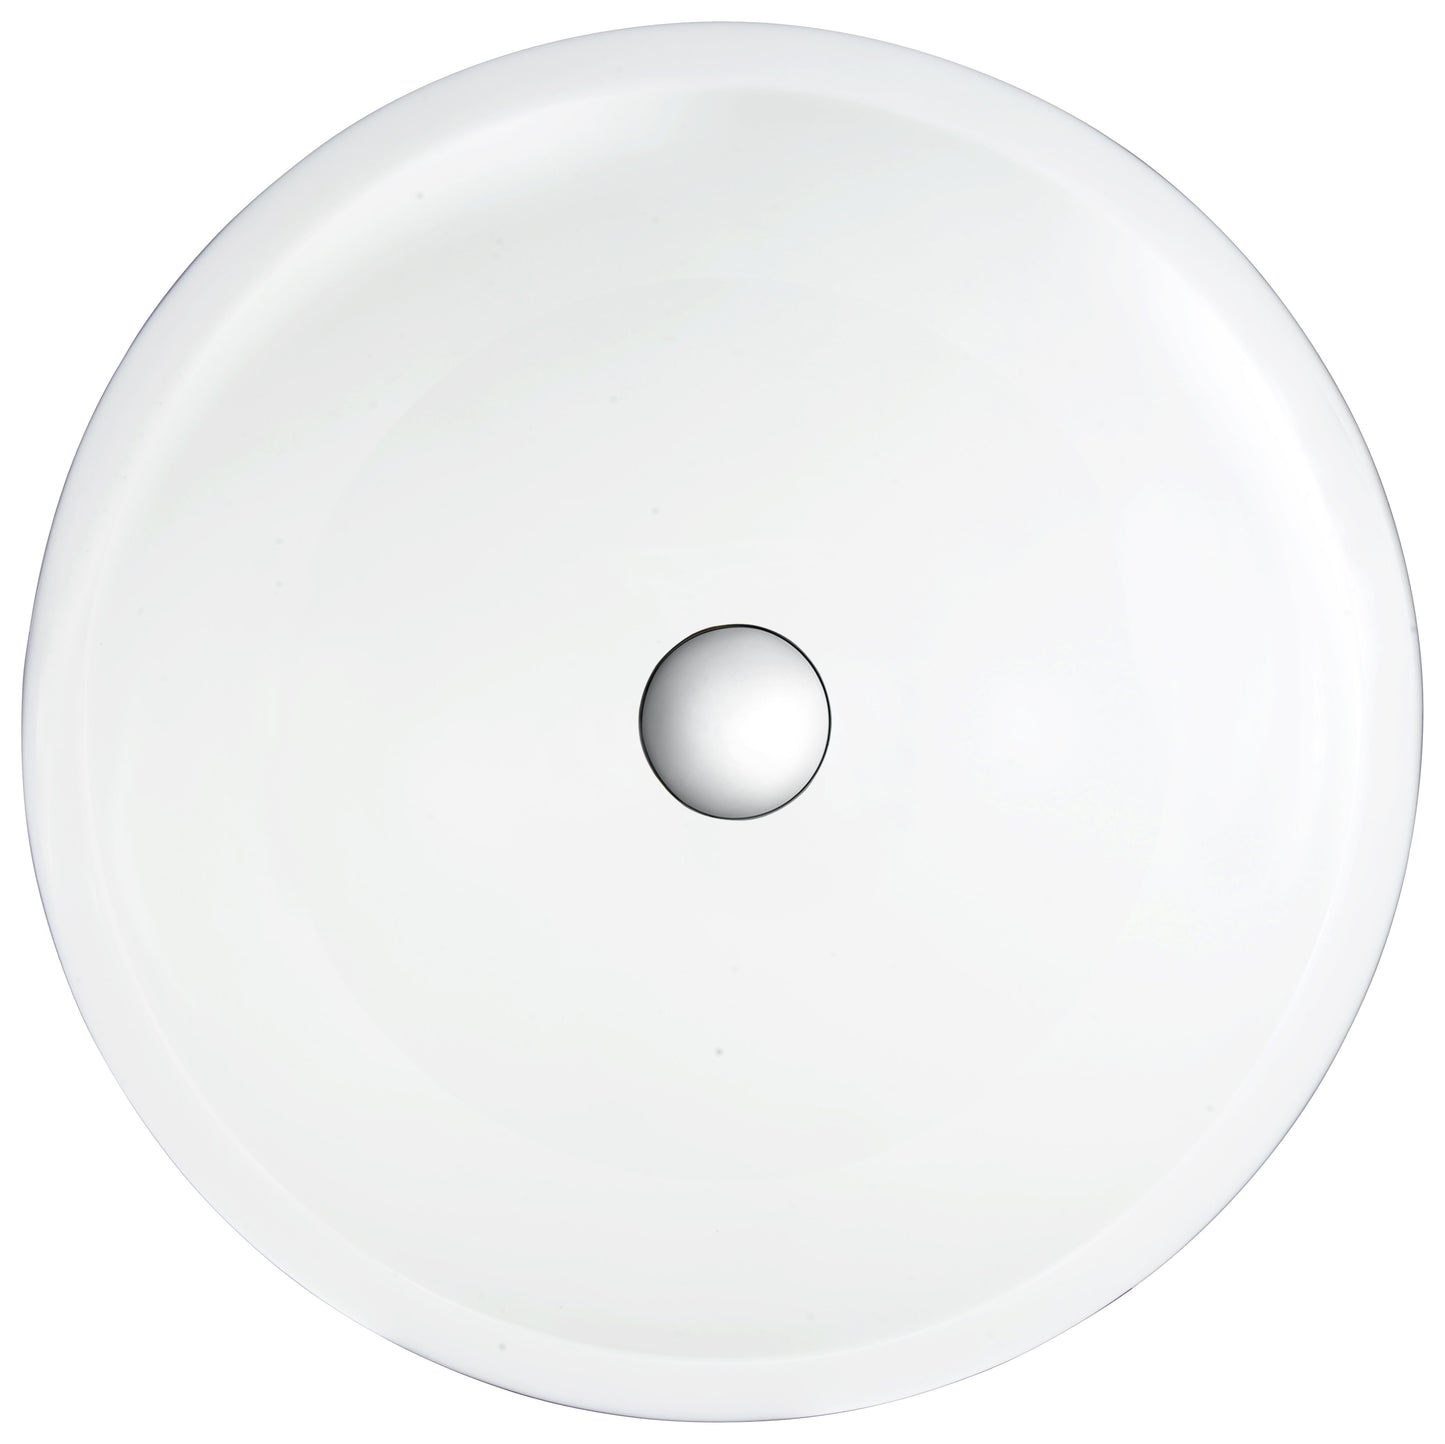 Egret Series Vessel Sink in White - Luxe Bathroom Vanities